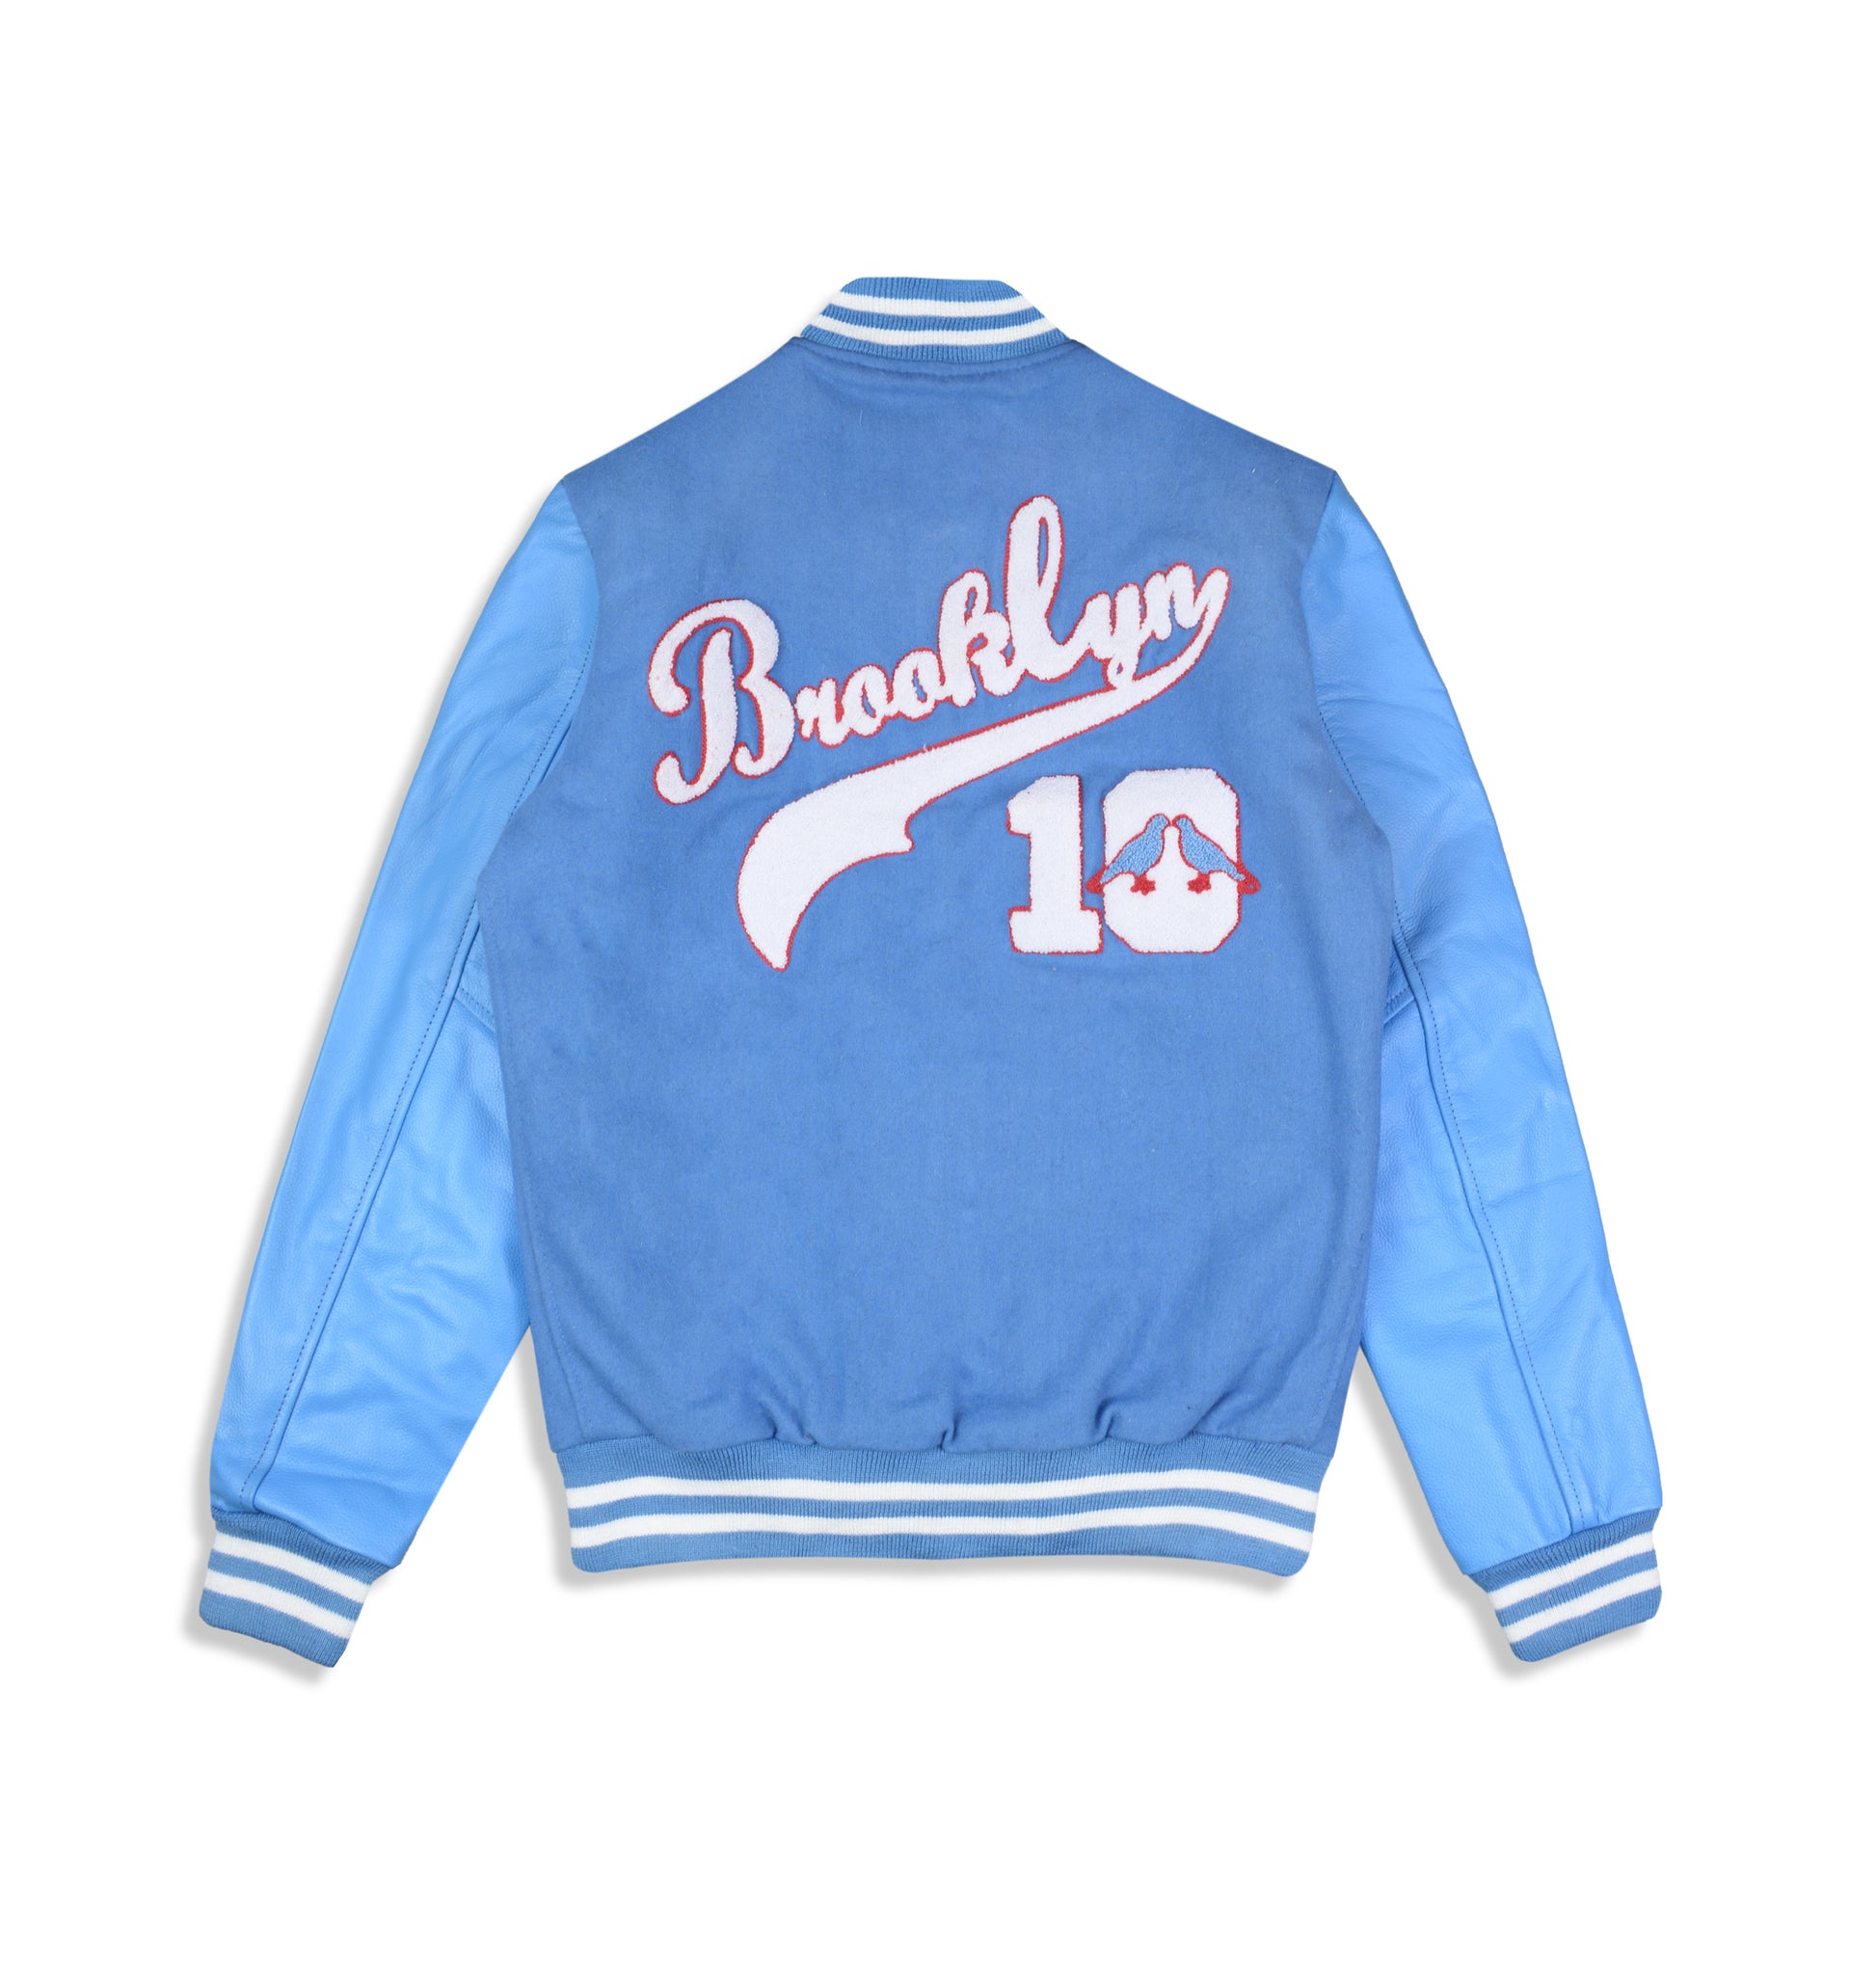 Varsity Brooklyn Dodgers Blue And White Jacket